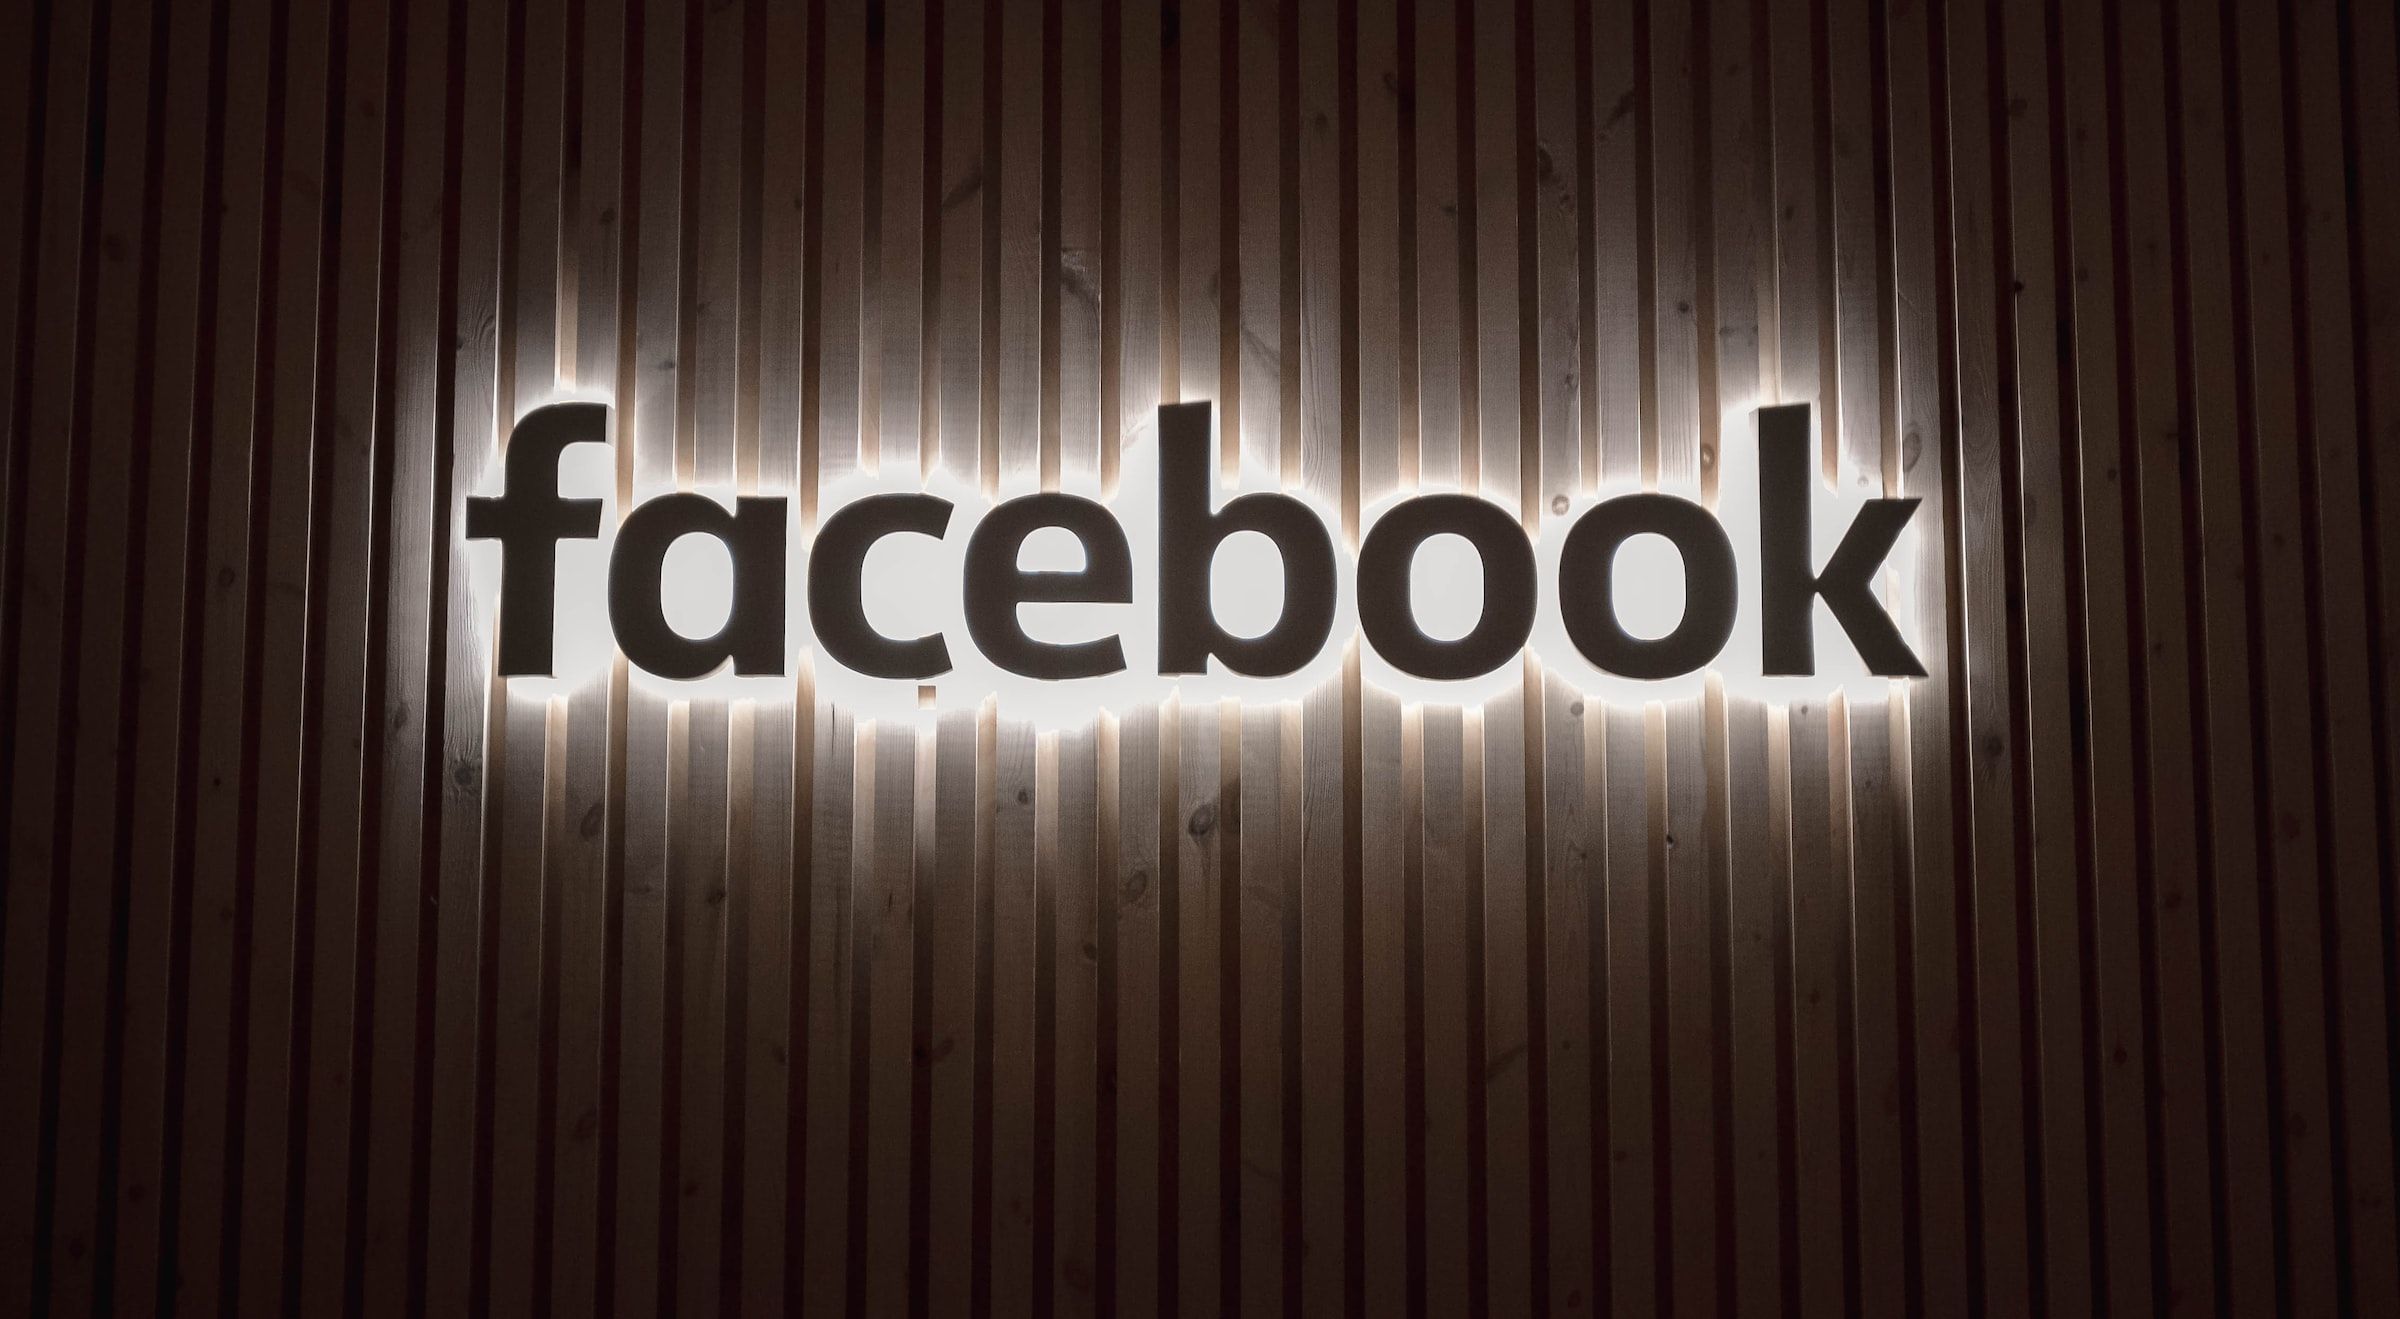 Facebook logo against a wood fence